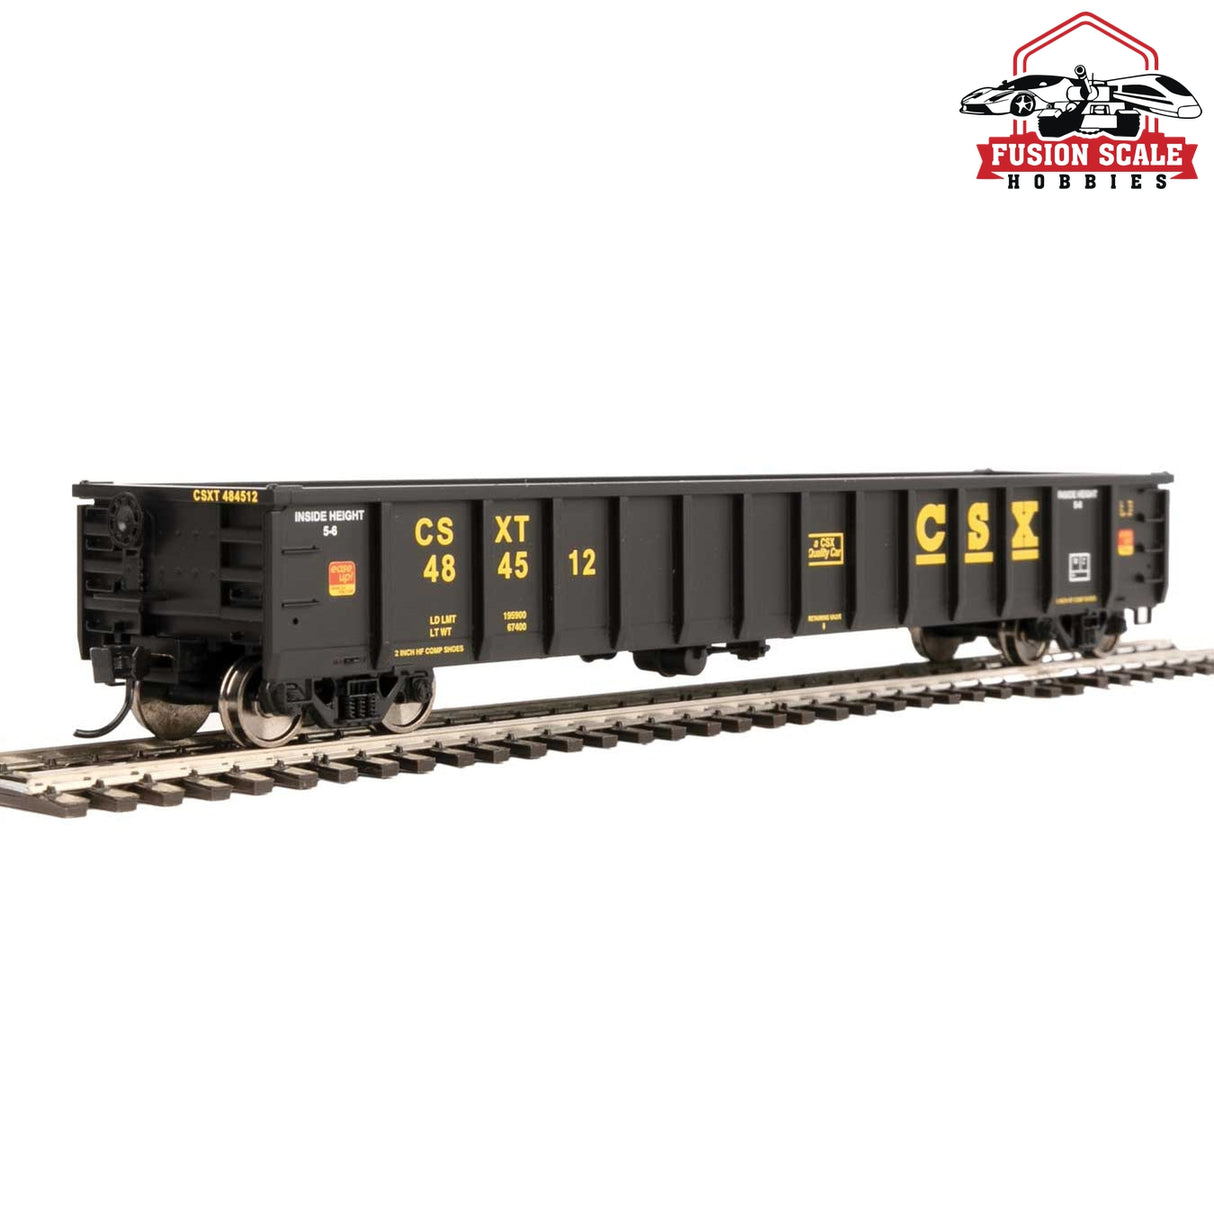 Walthers Mainline HO Scale 53' Railgon Gondola Ready To Run CSX #484512 (black, yellow)